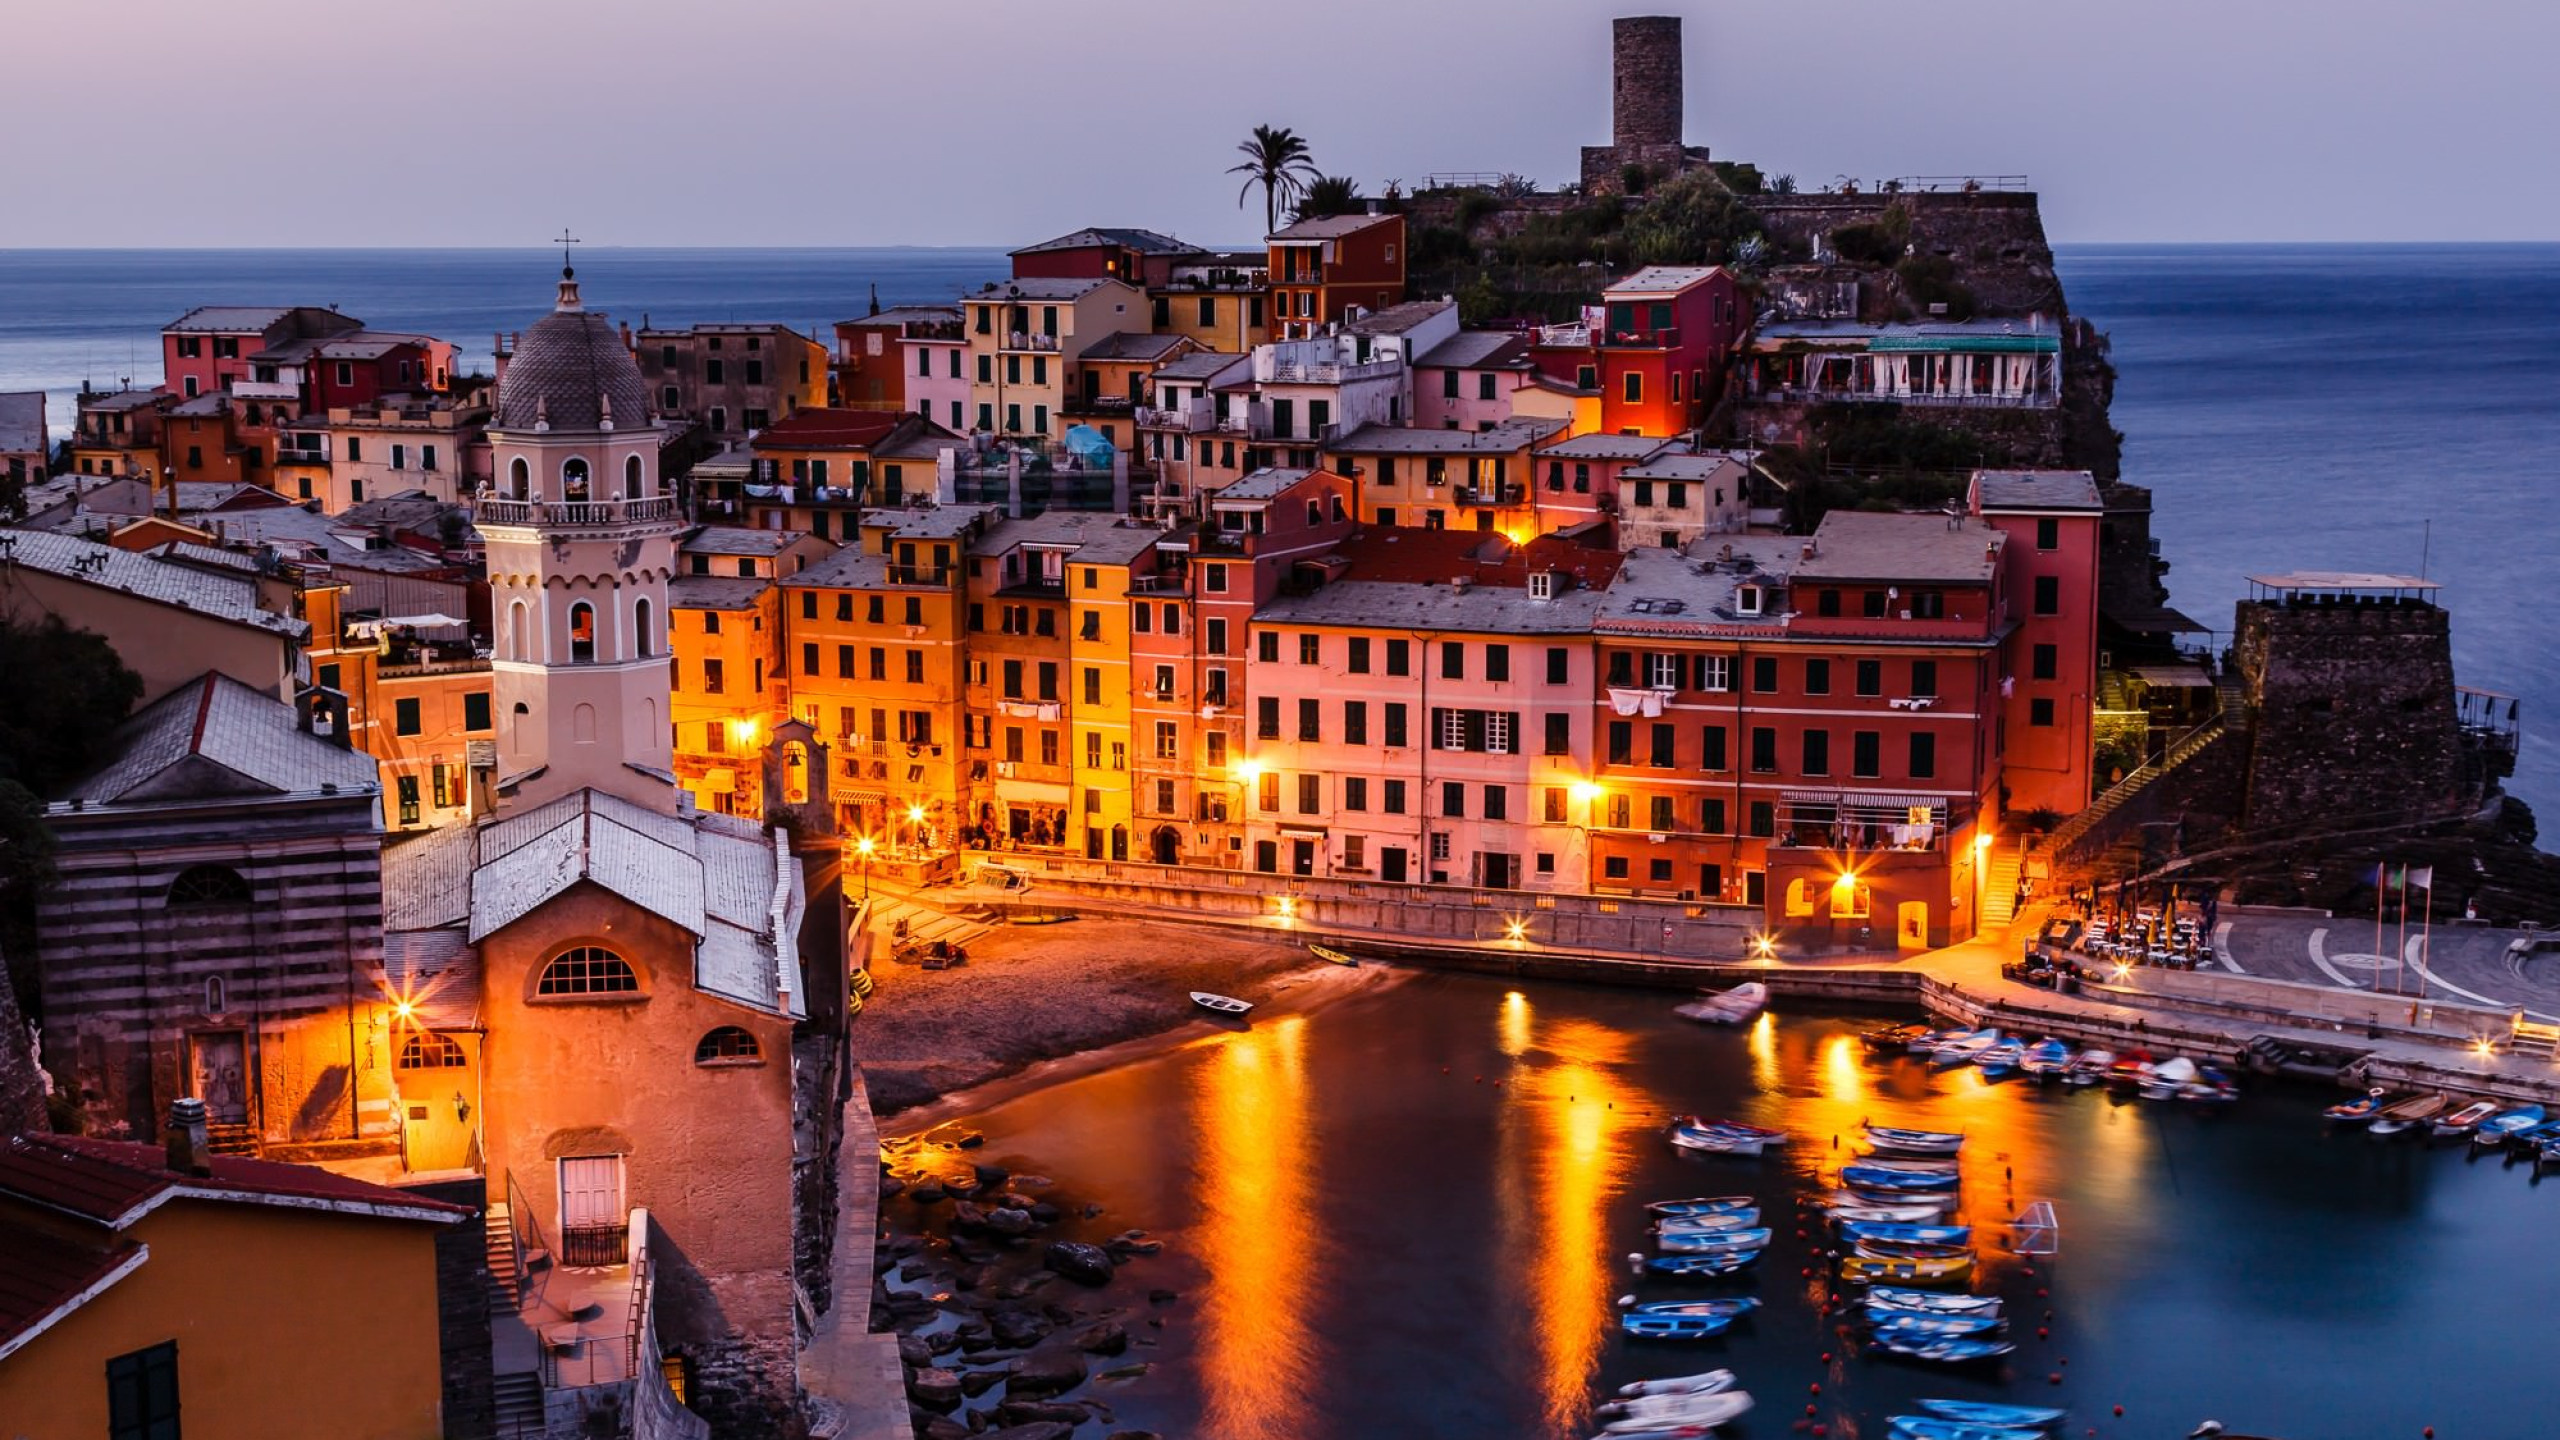 Genoa wallpapers HD, Genoa backgrounds, Free images download, Stunning Genoa views, 2560x1440 HD Desktop